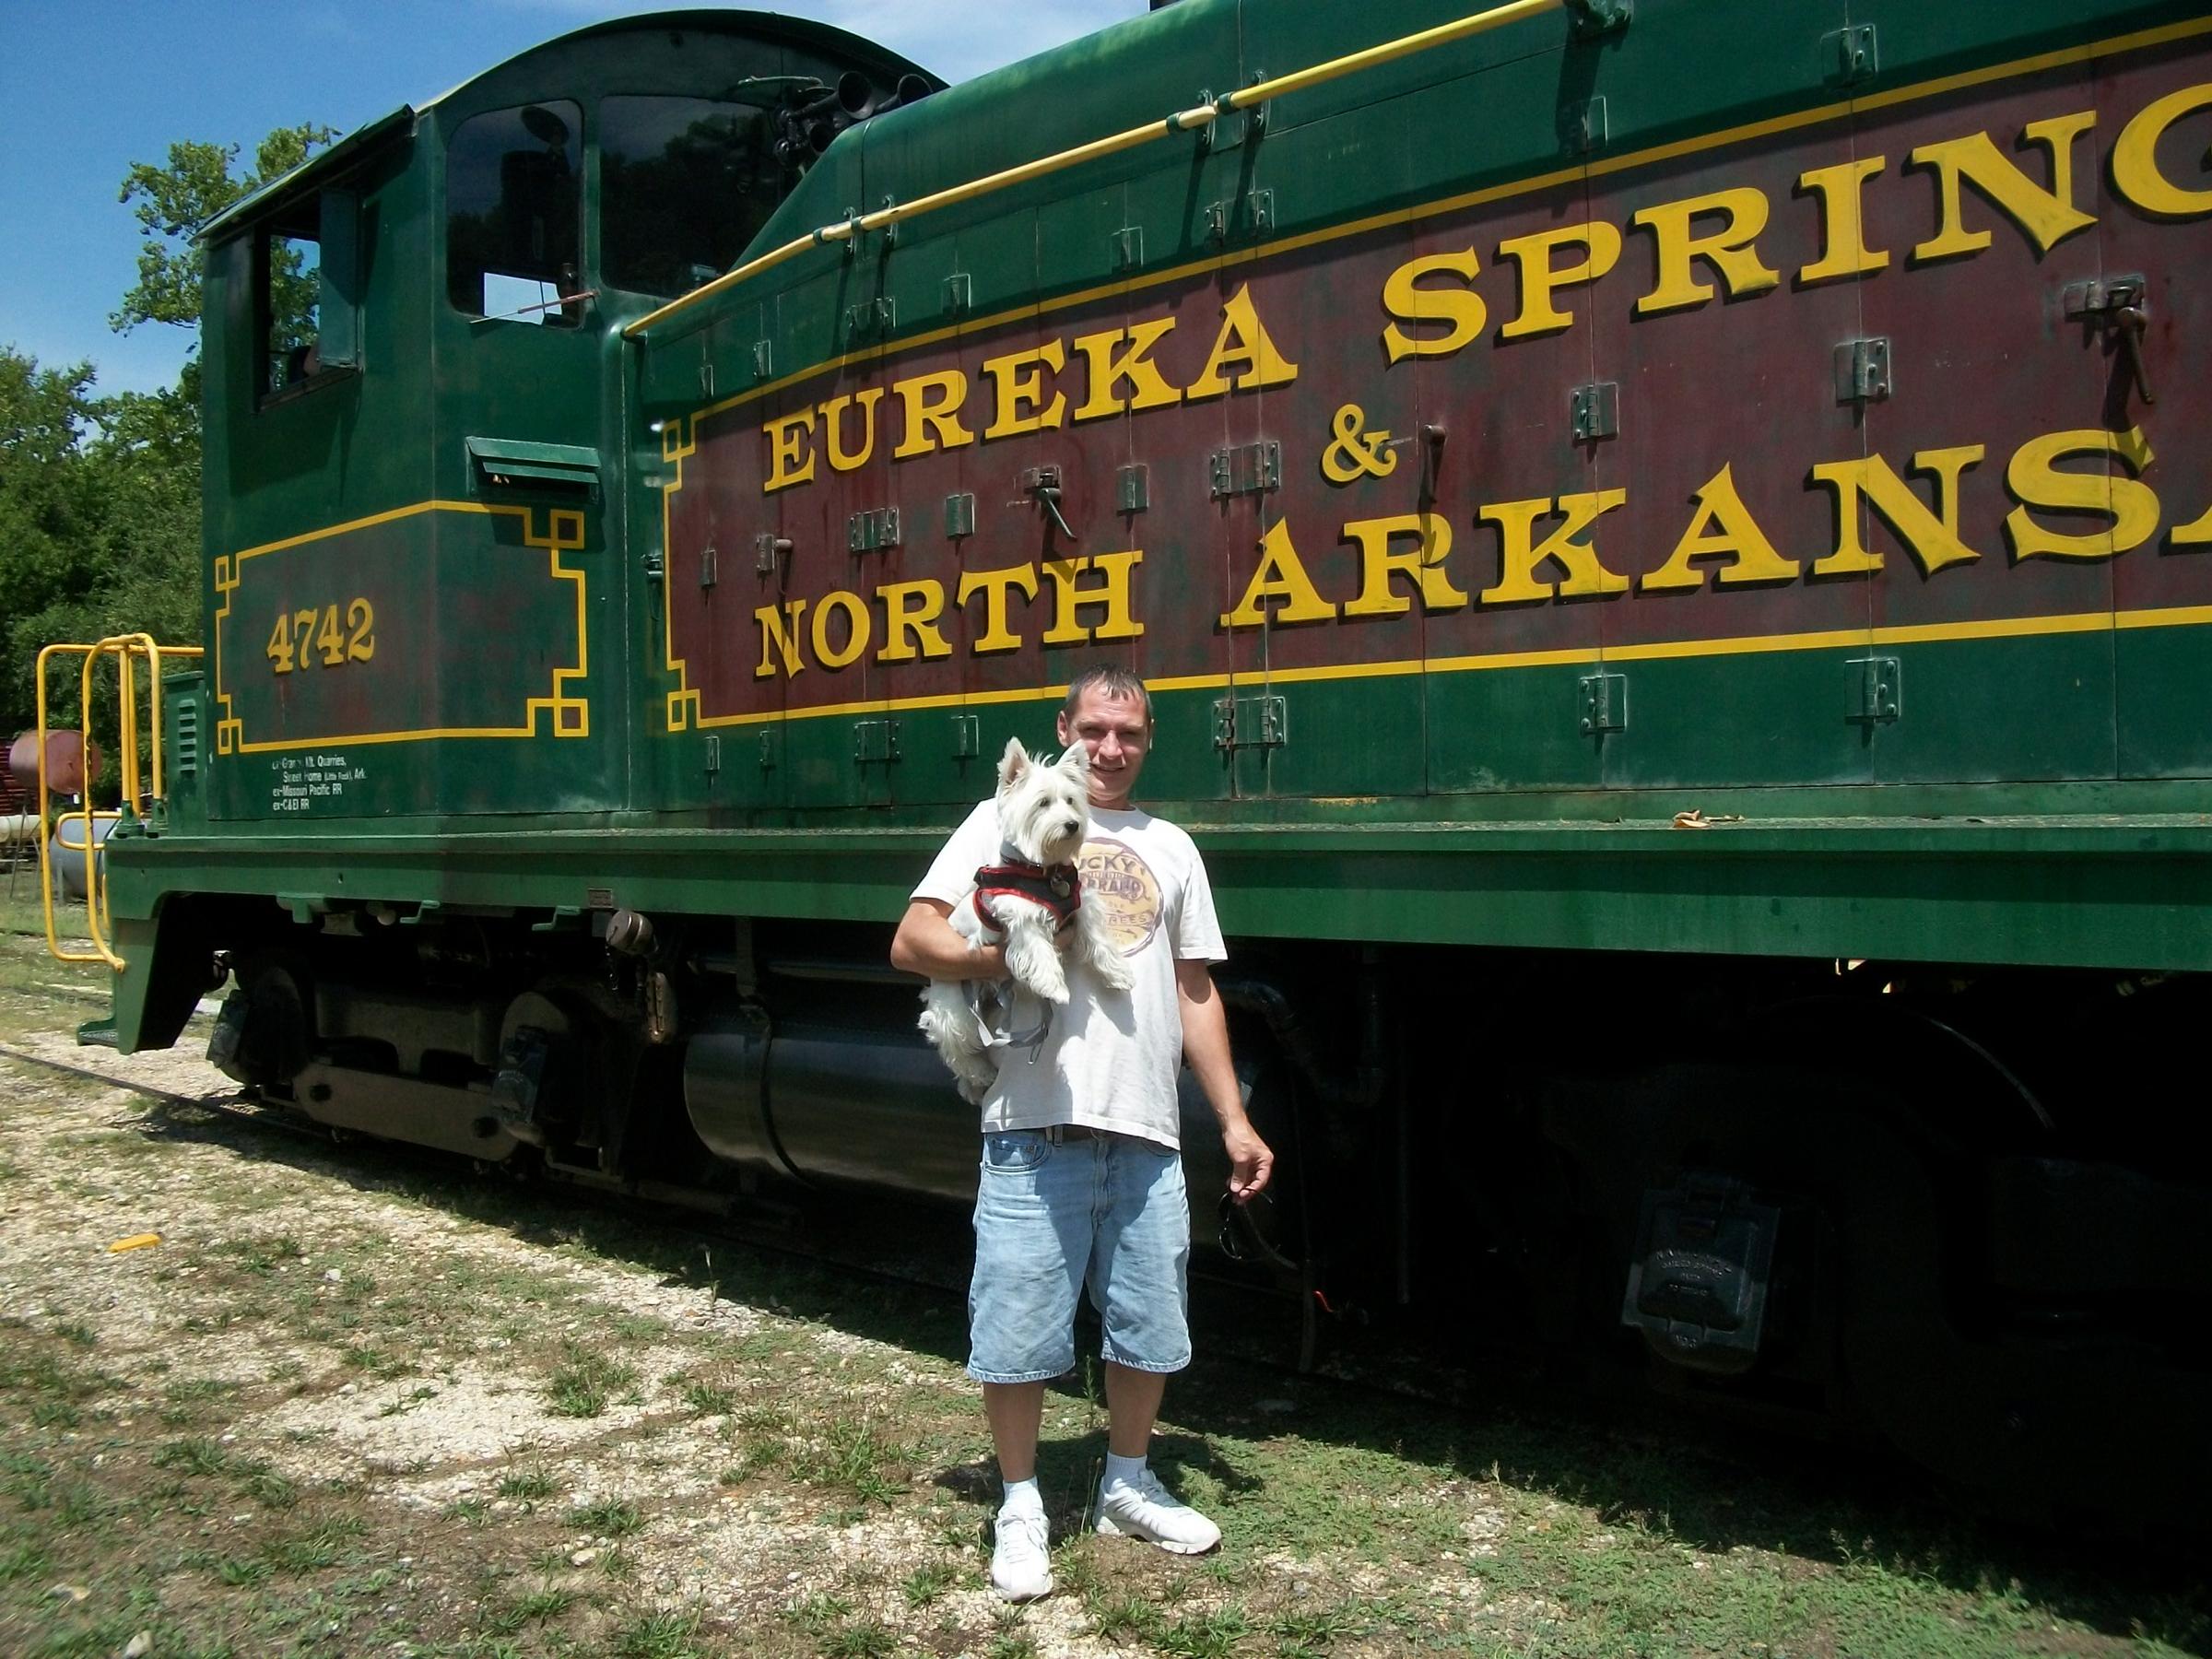 Pet Friendly Eureka Springs & North Arkansas Railway